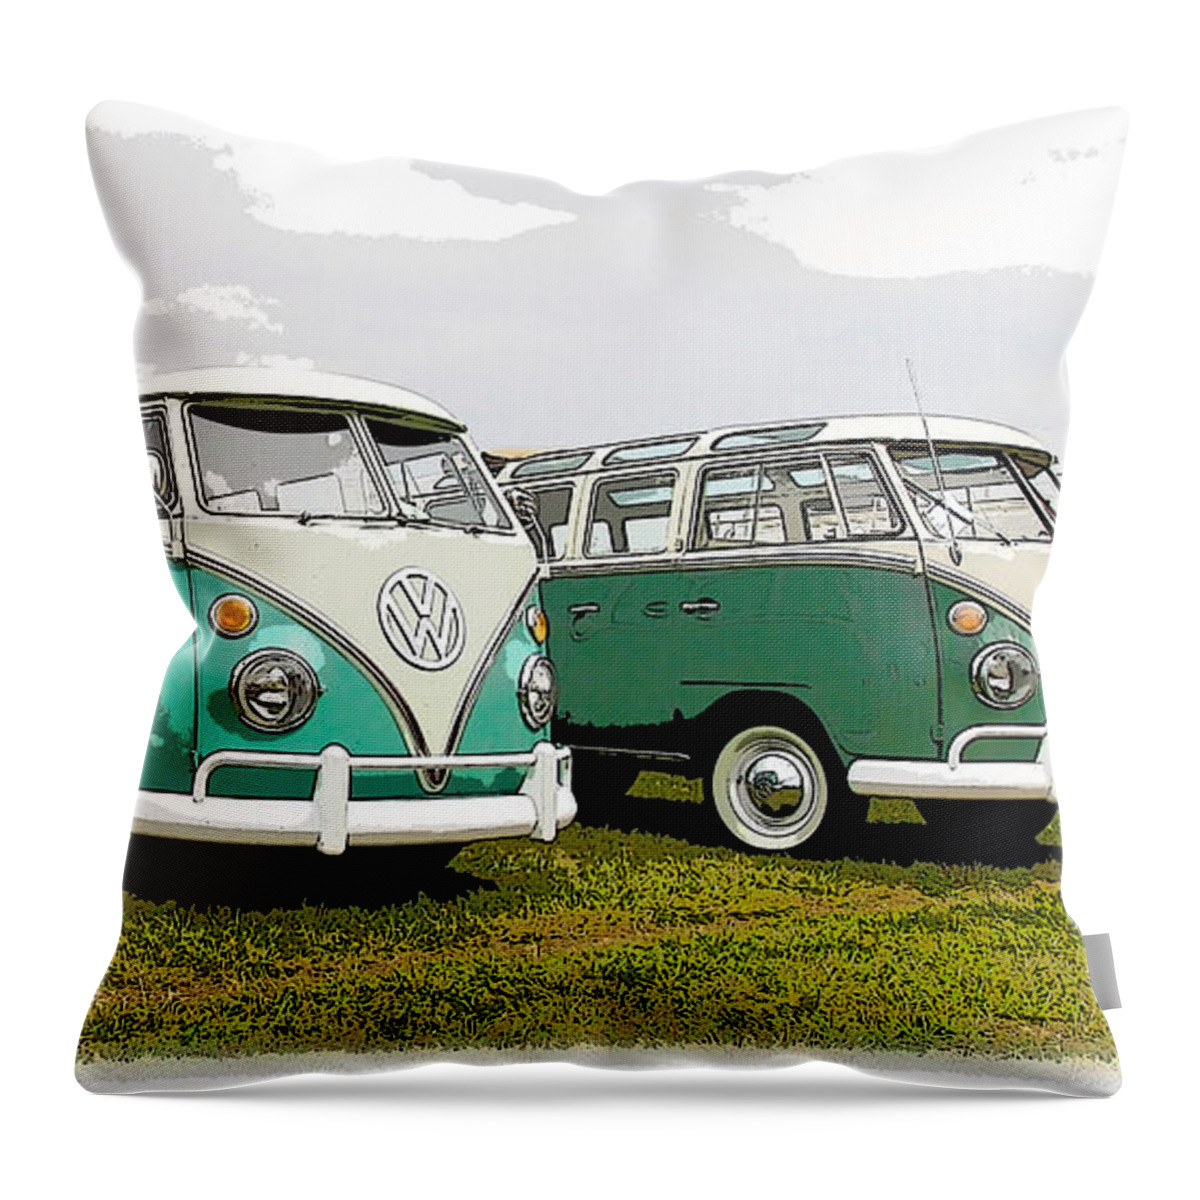 Volkswagen Throw Pillow featuring the photograph Volkswagen Bus Row by Steve McKinzie